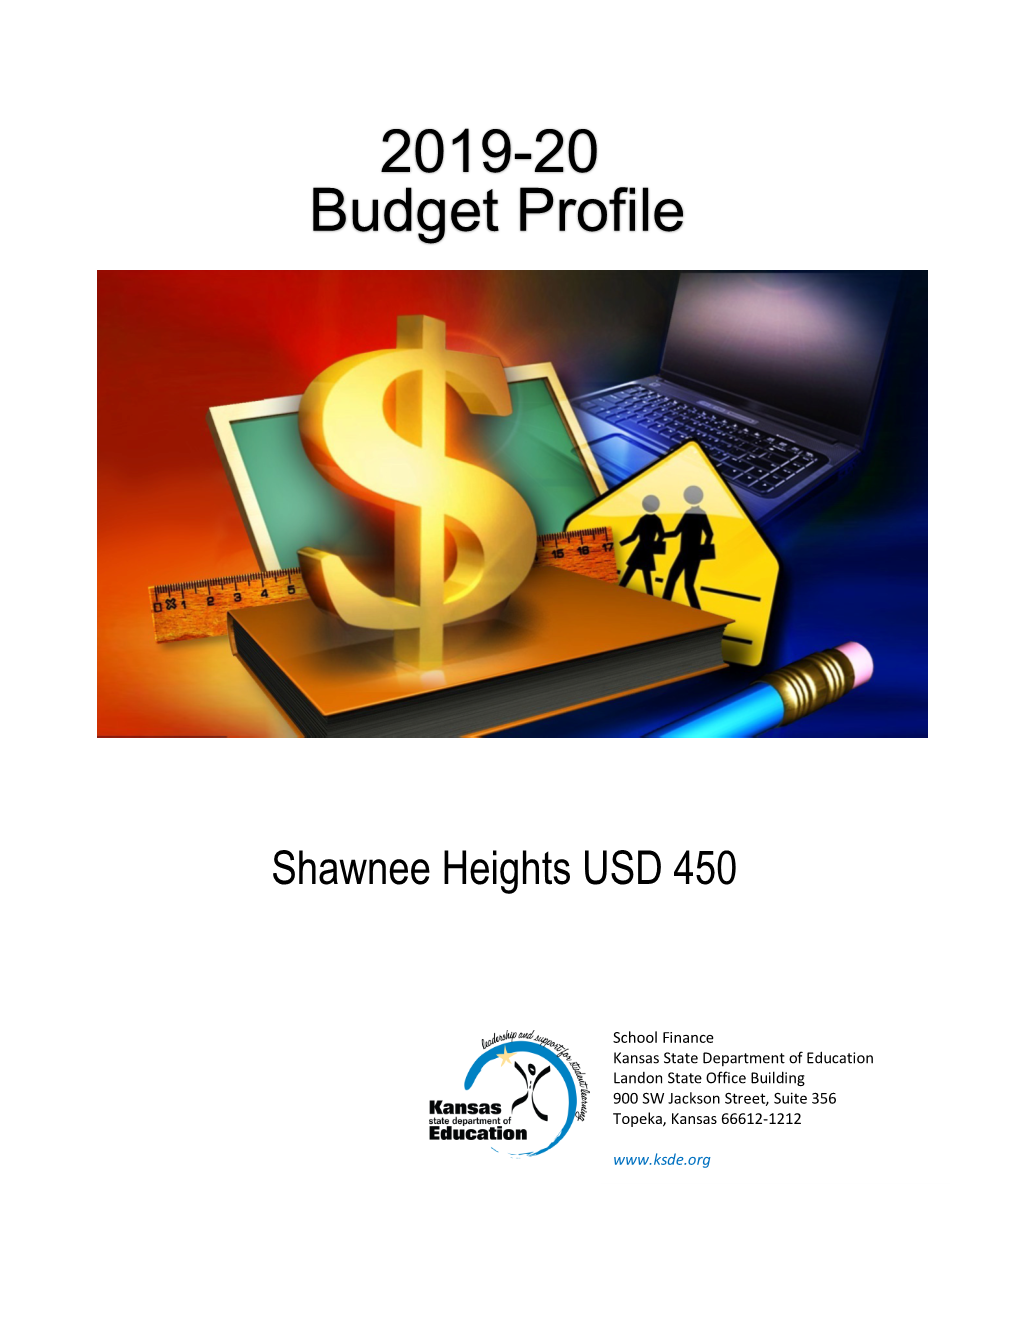 Budget Profile 2019-20